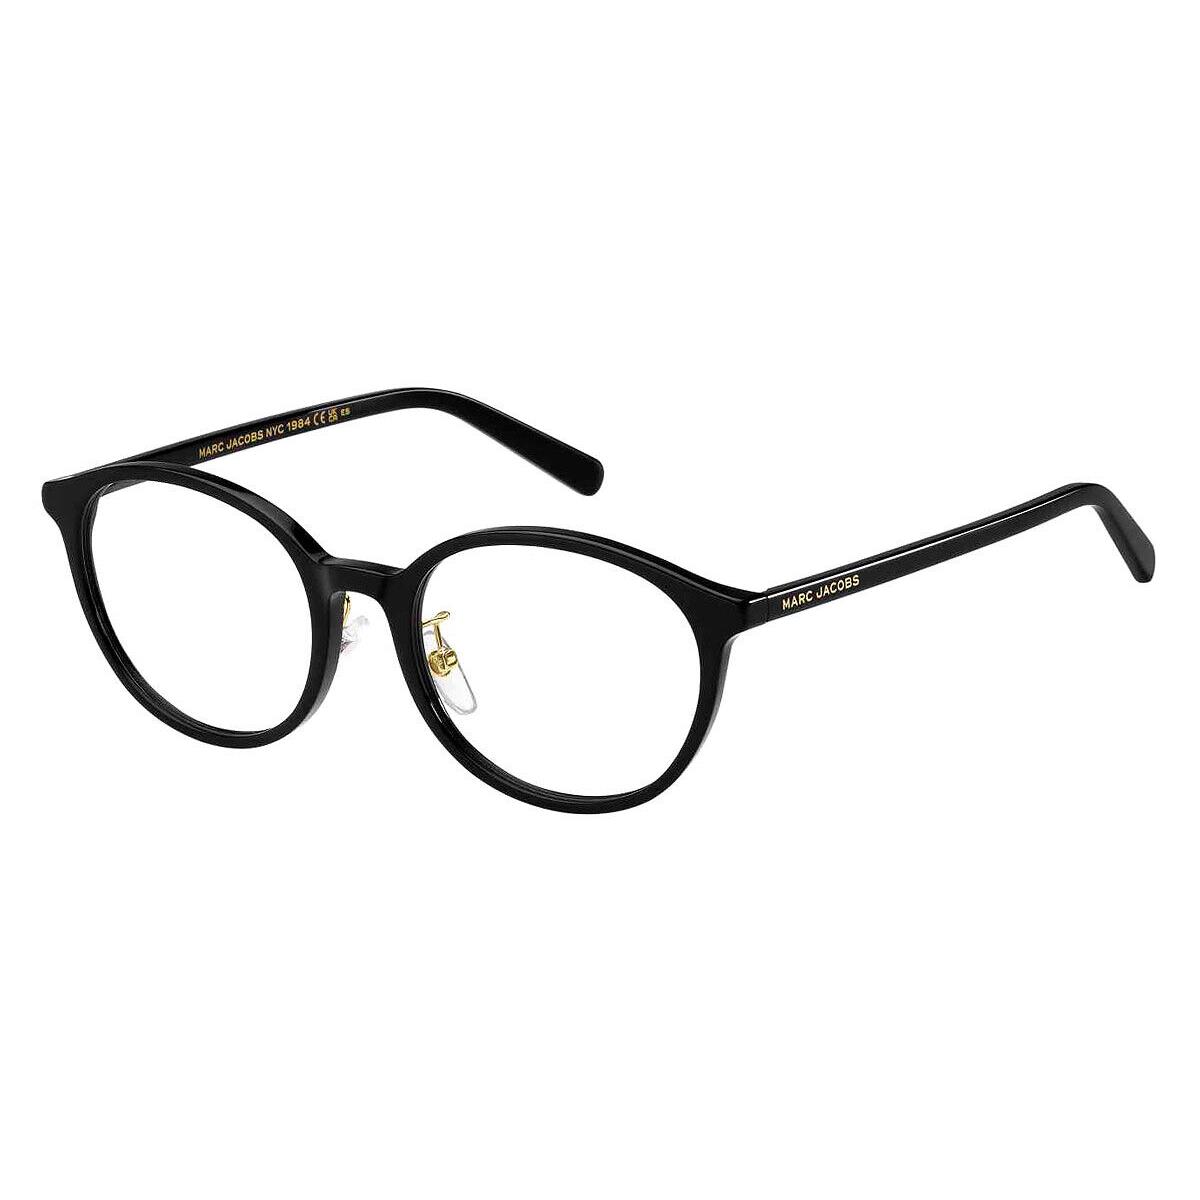 Marc Jacobs Mjb Eyeglasses Women Black 51mm